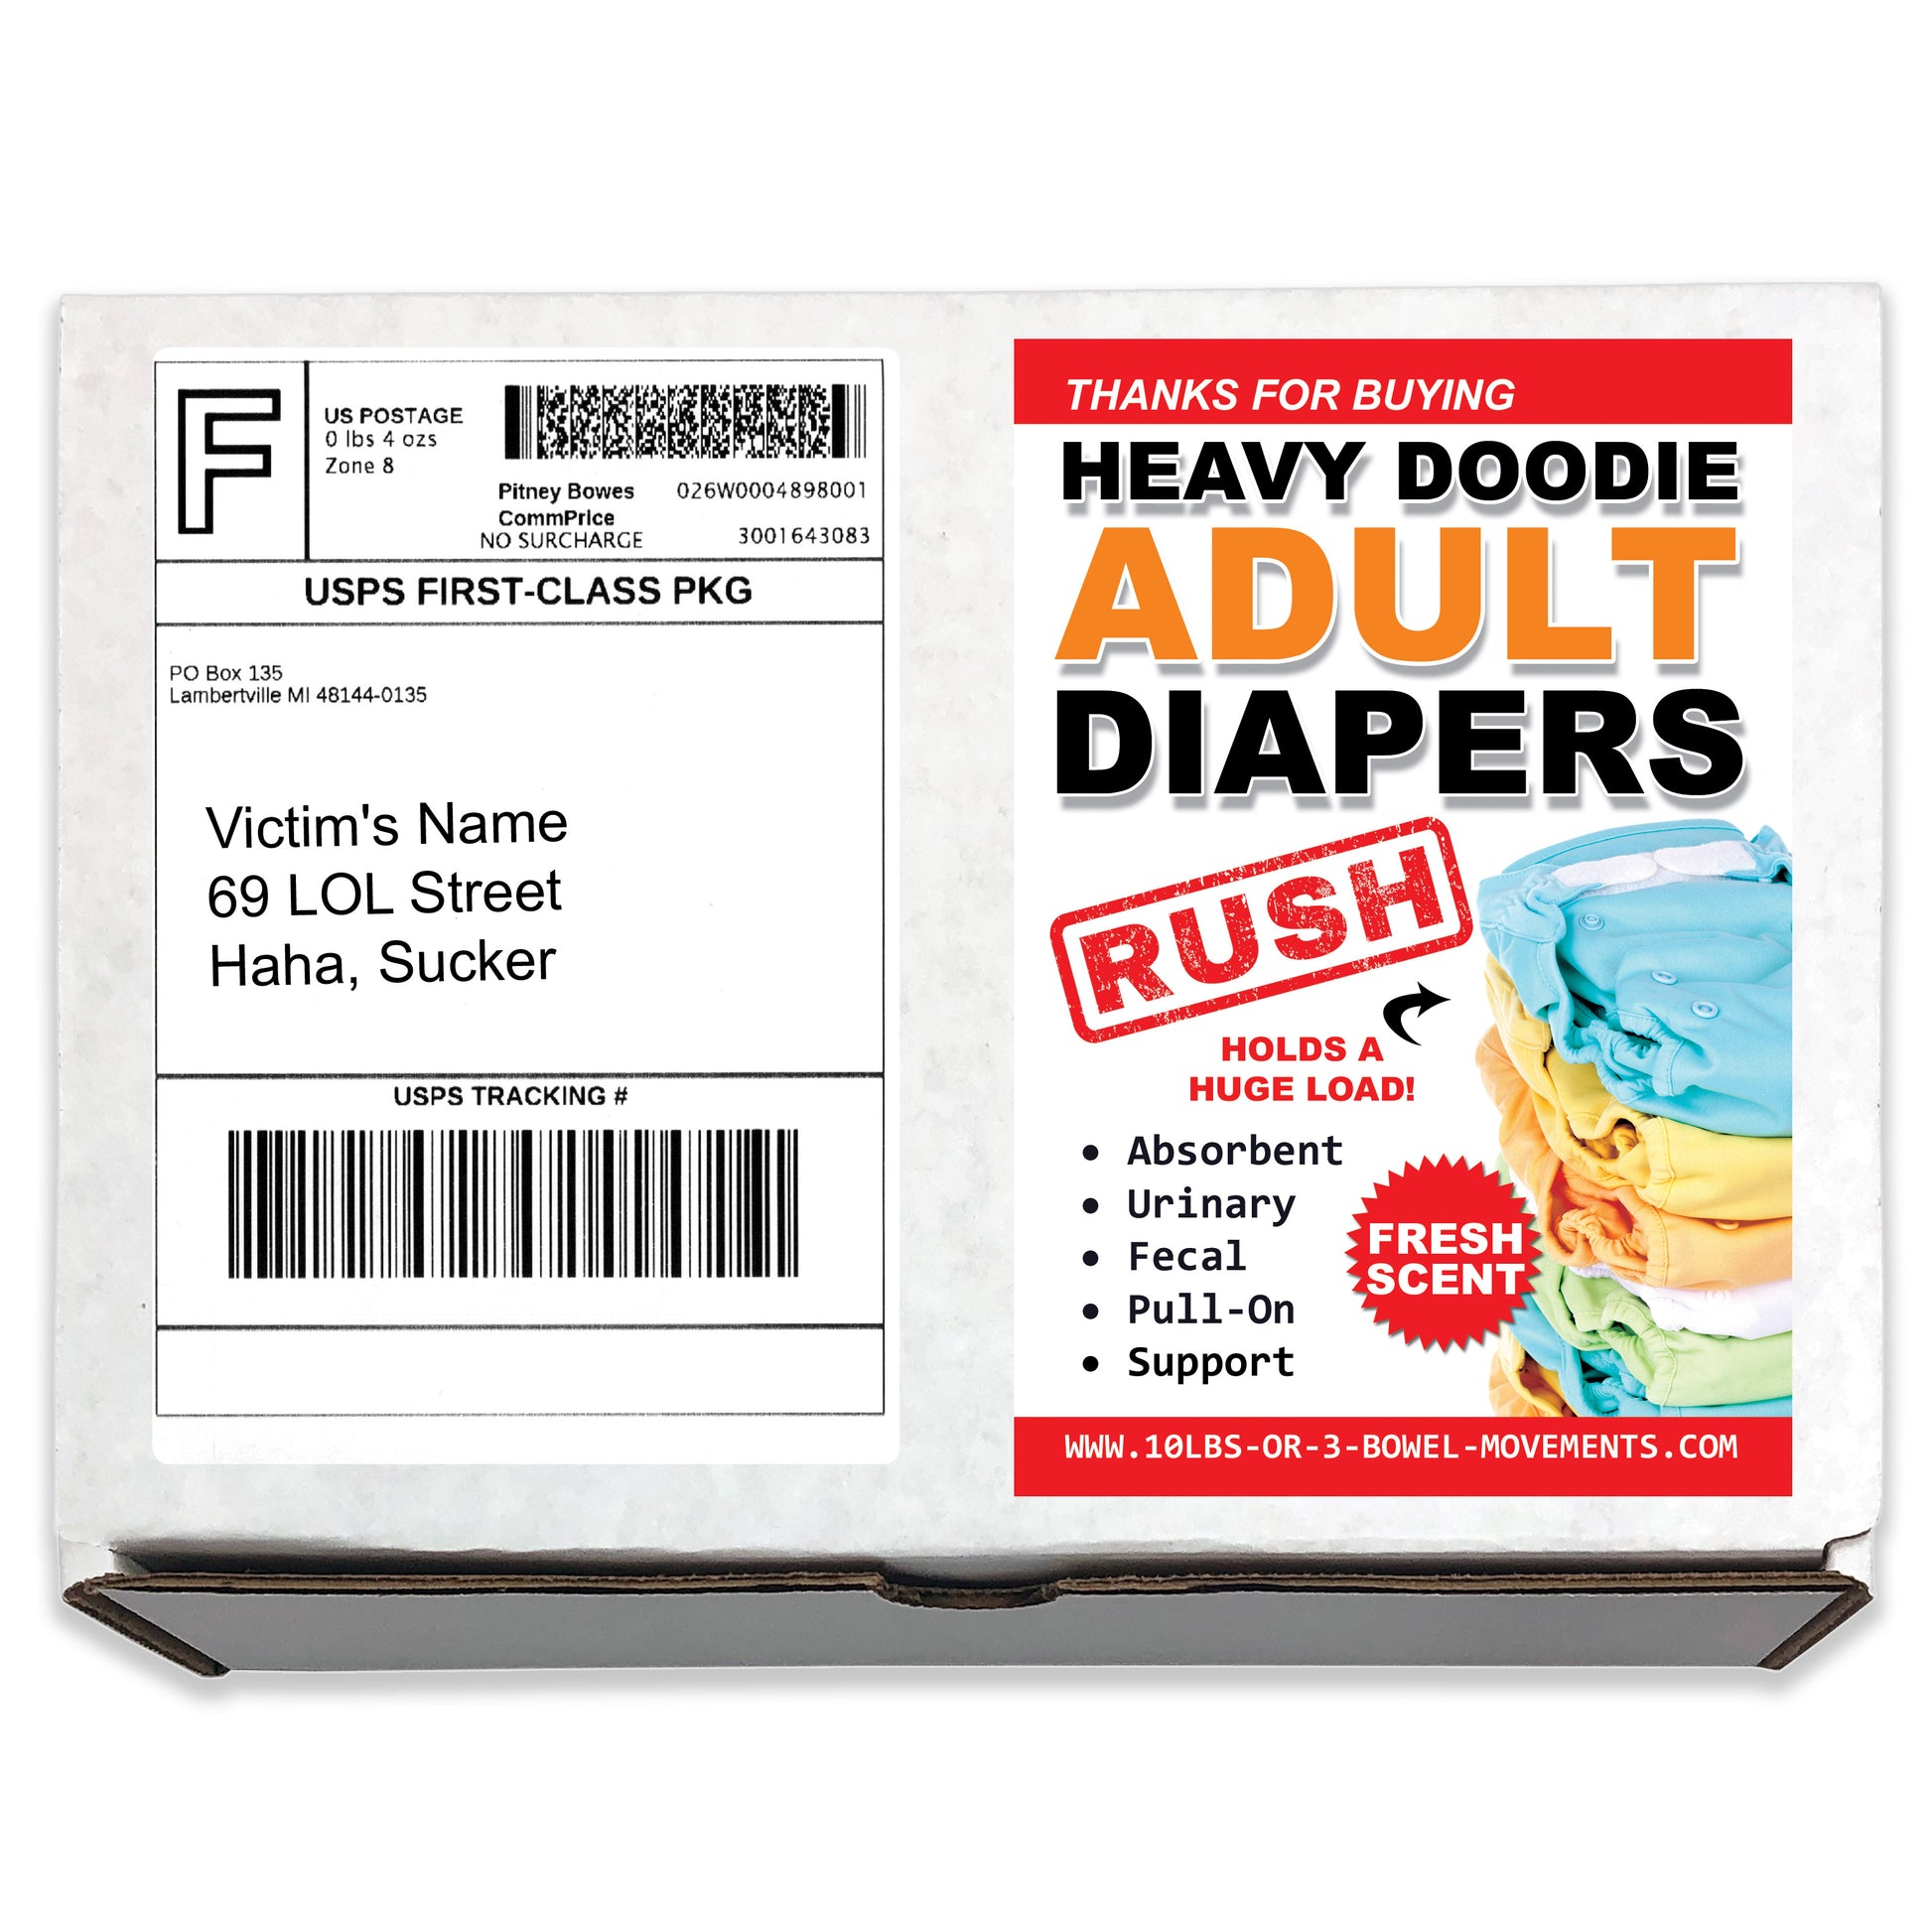 Heavy Doodie Adult Diapers embarrassing prank box